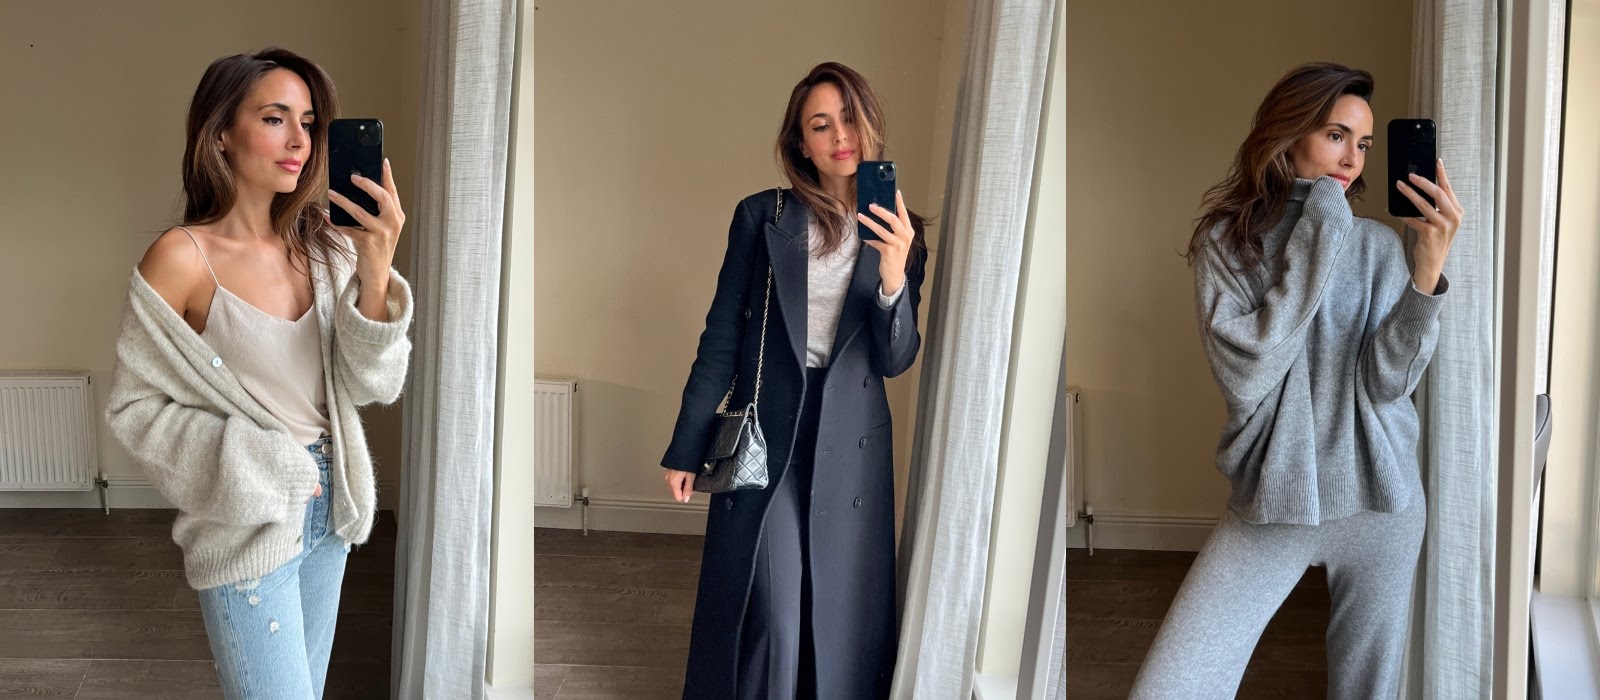 Nadia Forde: A week in my wardrobe